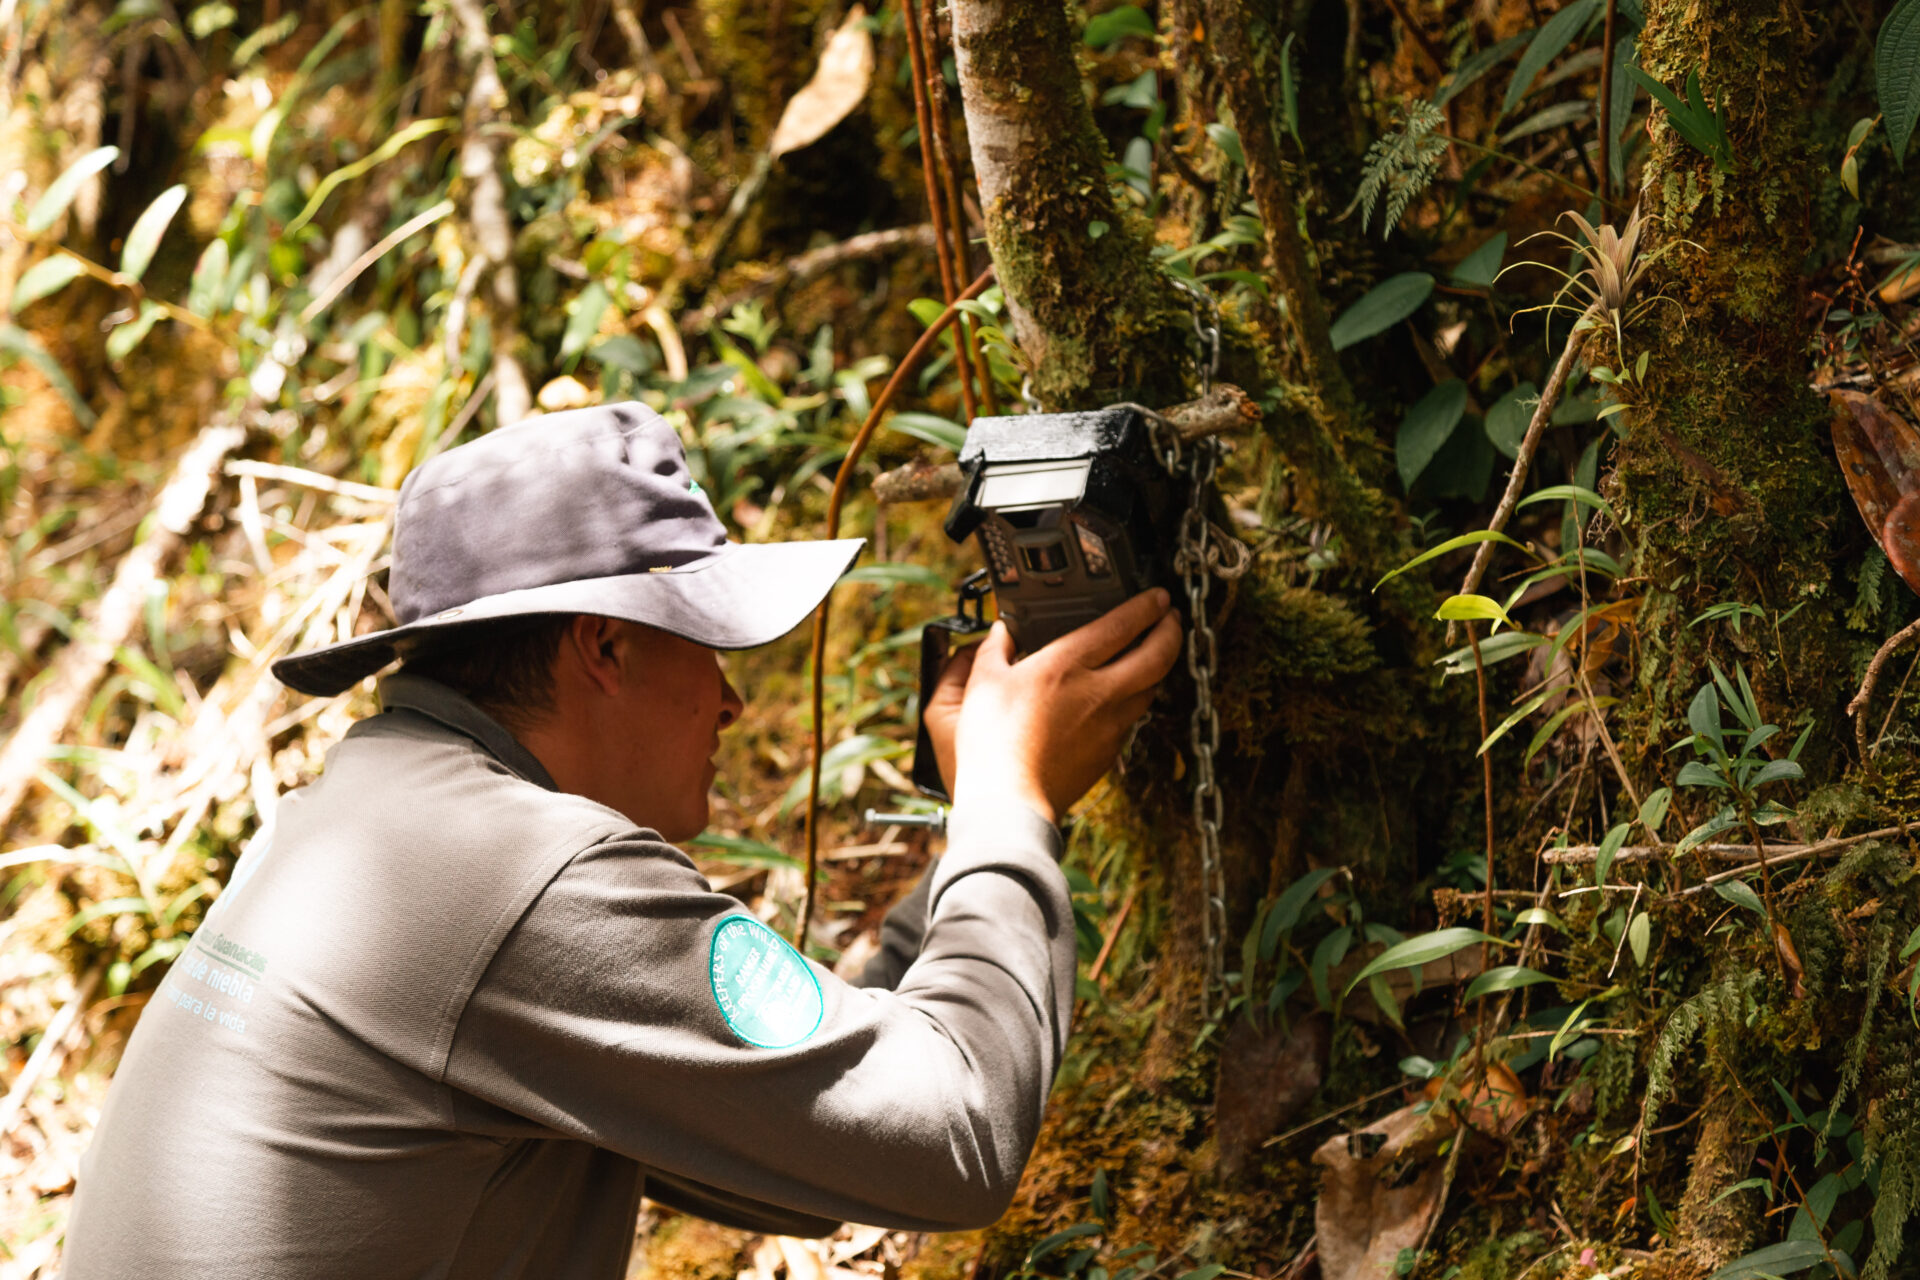 A ranger installs a camera to track species